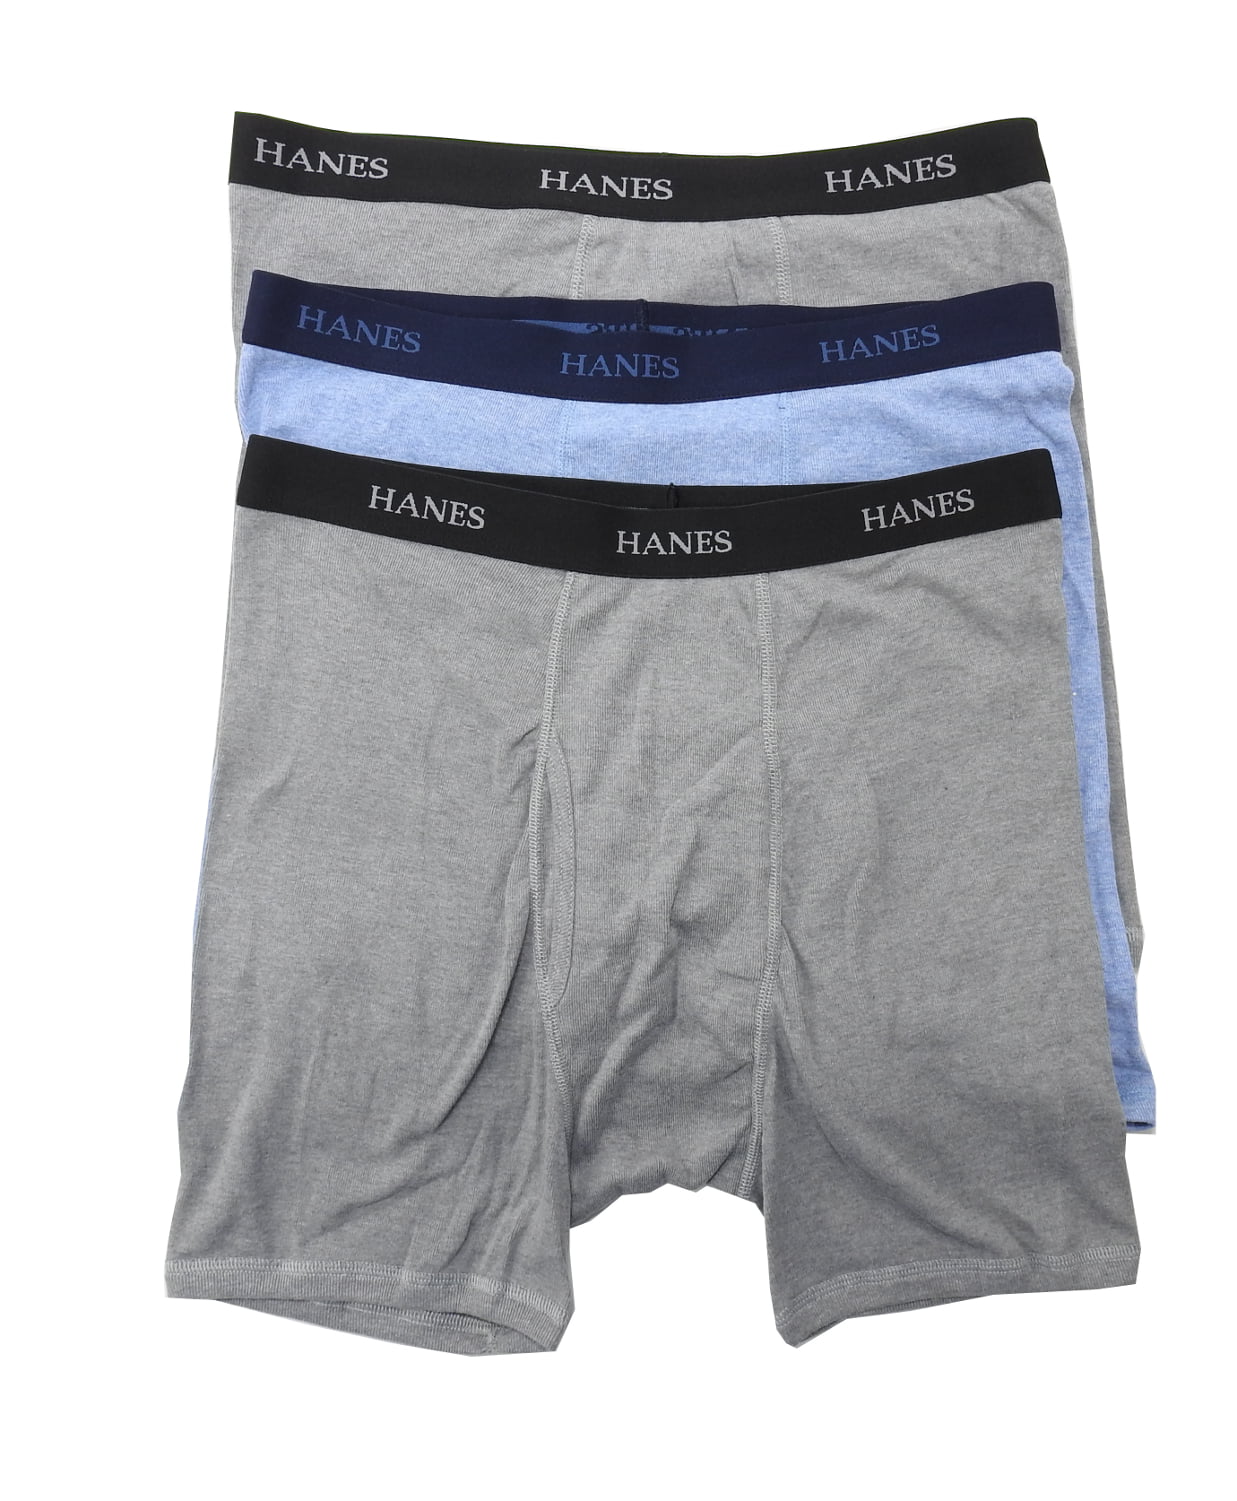 Hanes - Hanes Mens Size Large Cotton 3-Pack Boxer Briefs, Grey/Grey ...